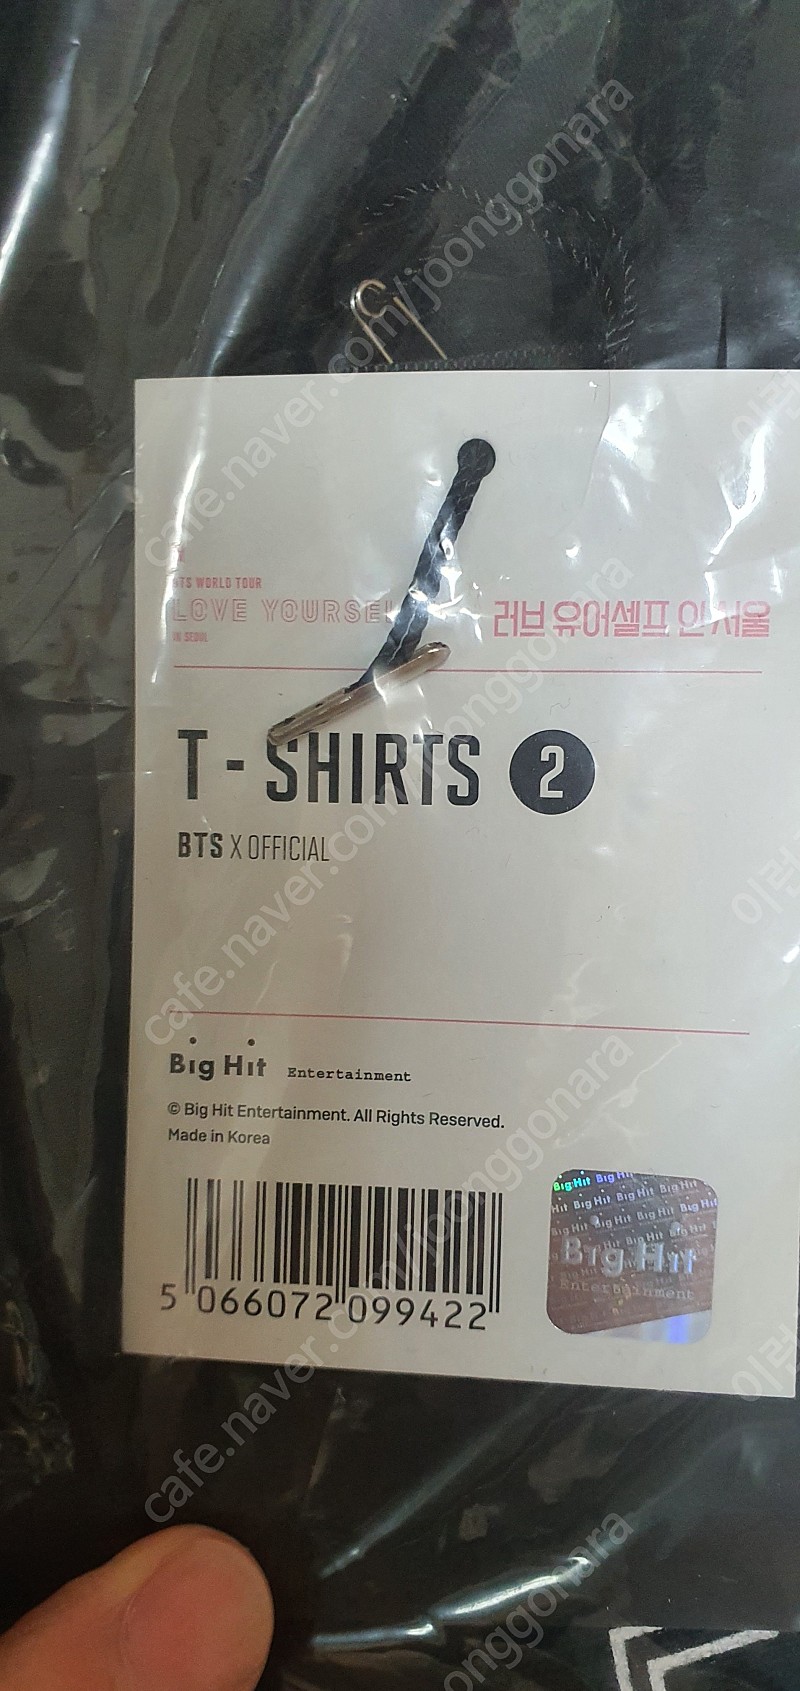 BTS 러브유어셀프인서울 티셔츠(검은색,사이즈2) 미개봉